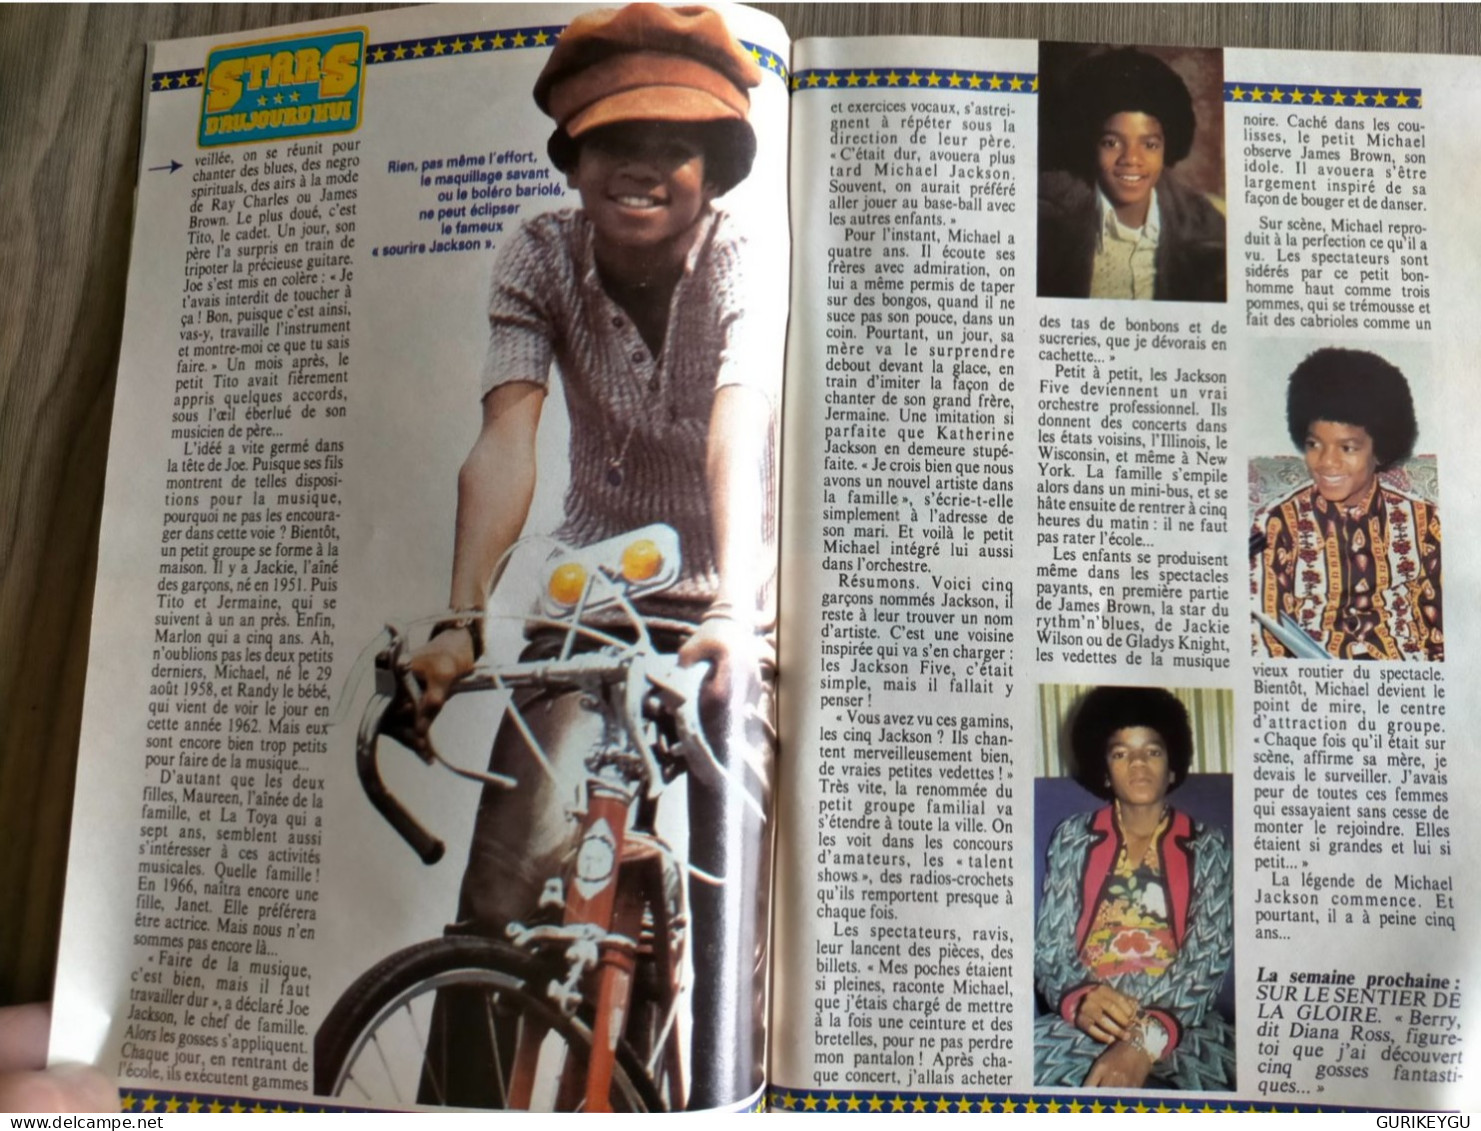 Magazine TELE POCHE N° 955 MICHAEL JACKSON YVES MONTAND 29/05/1984 TTBE - 1950 - Heute